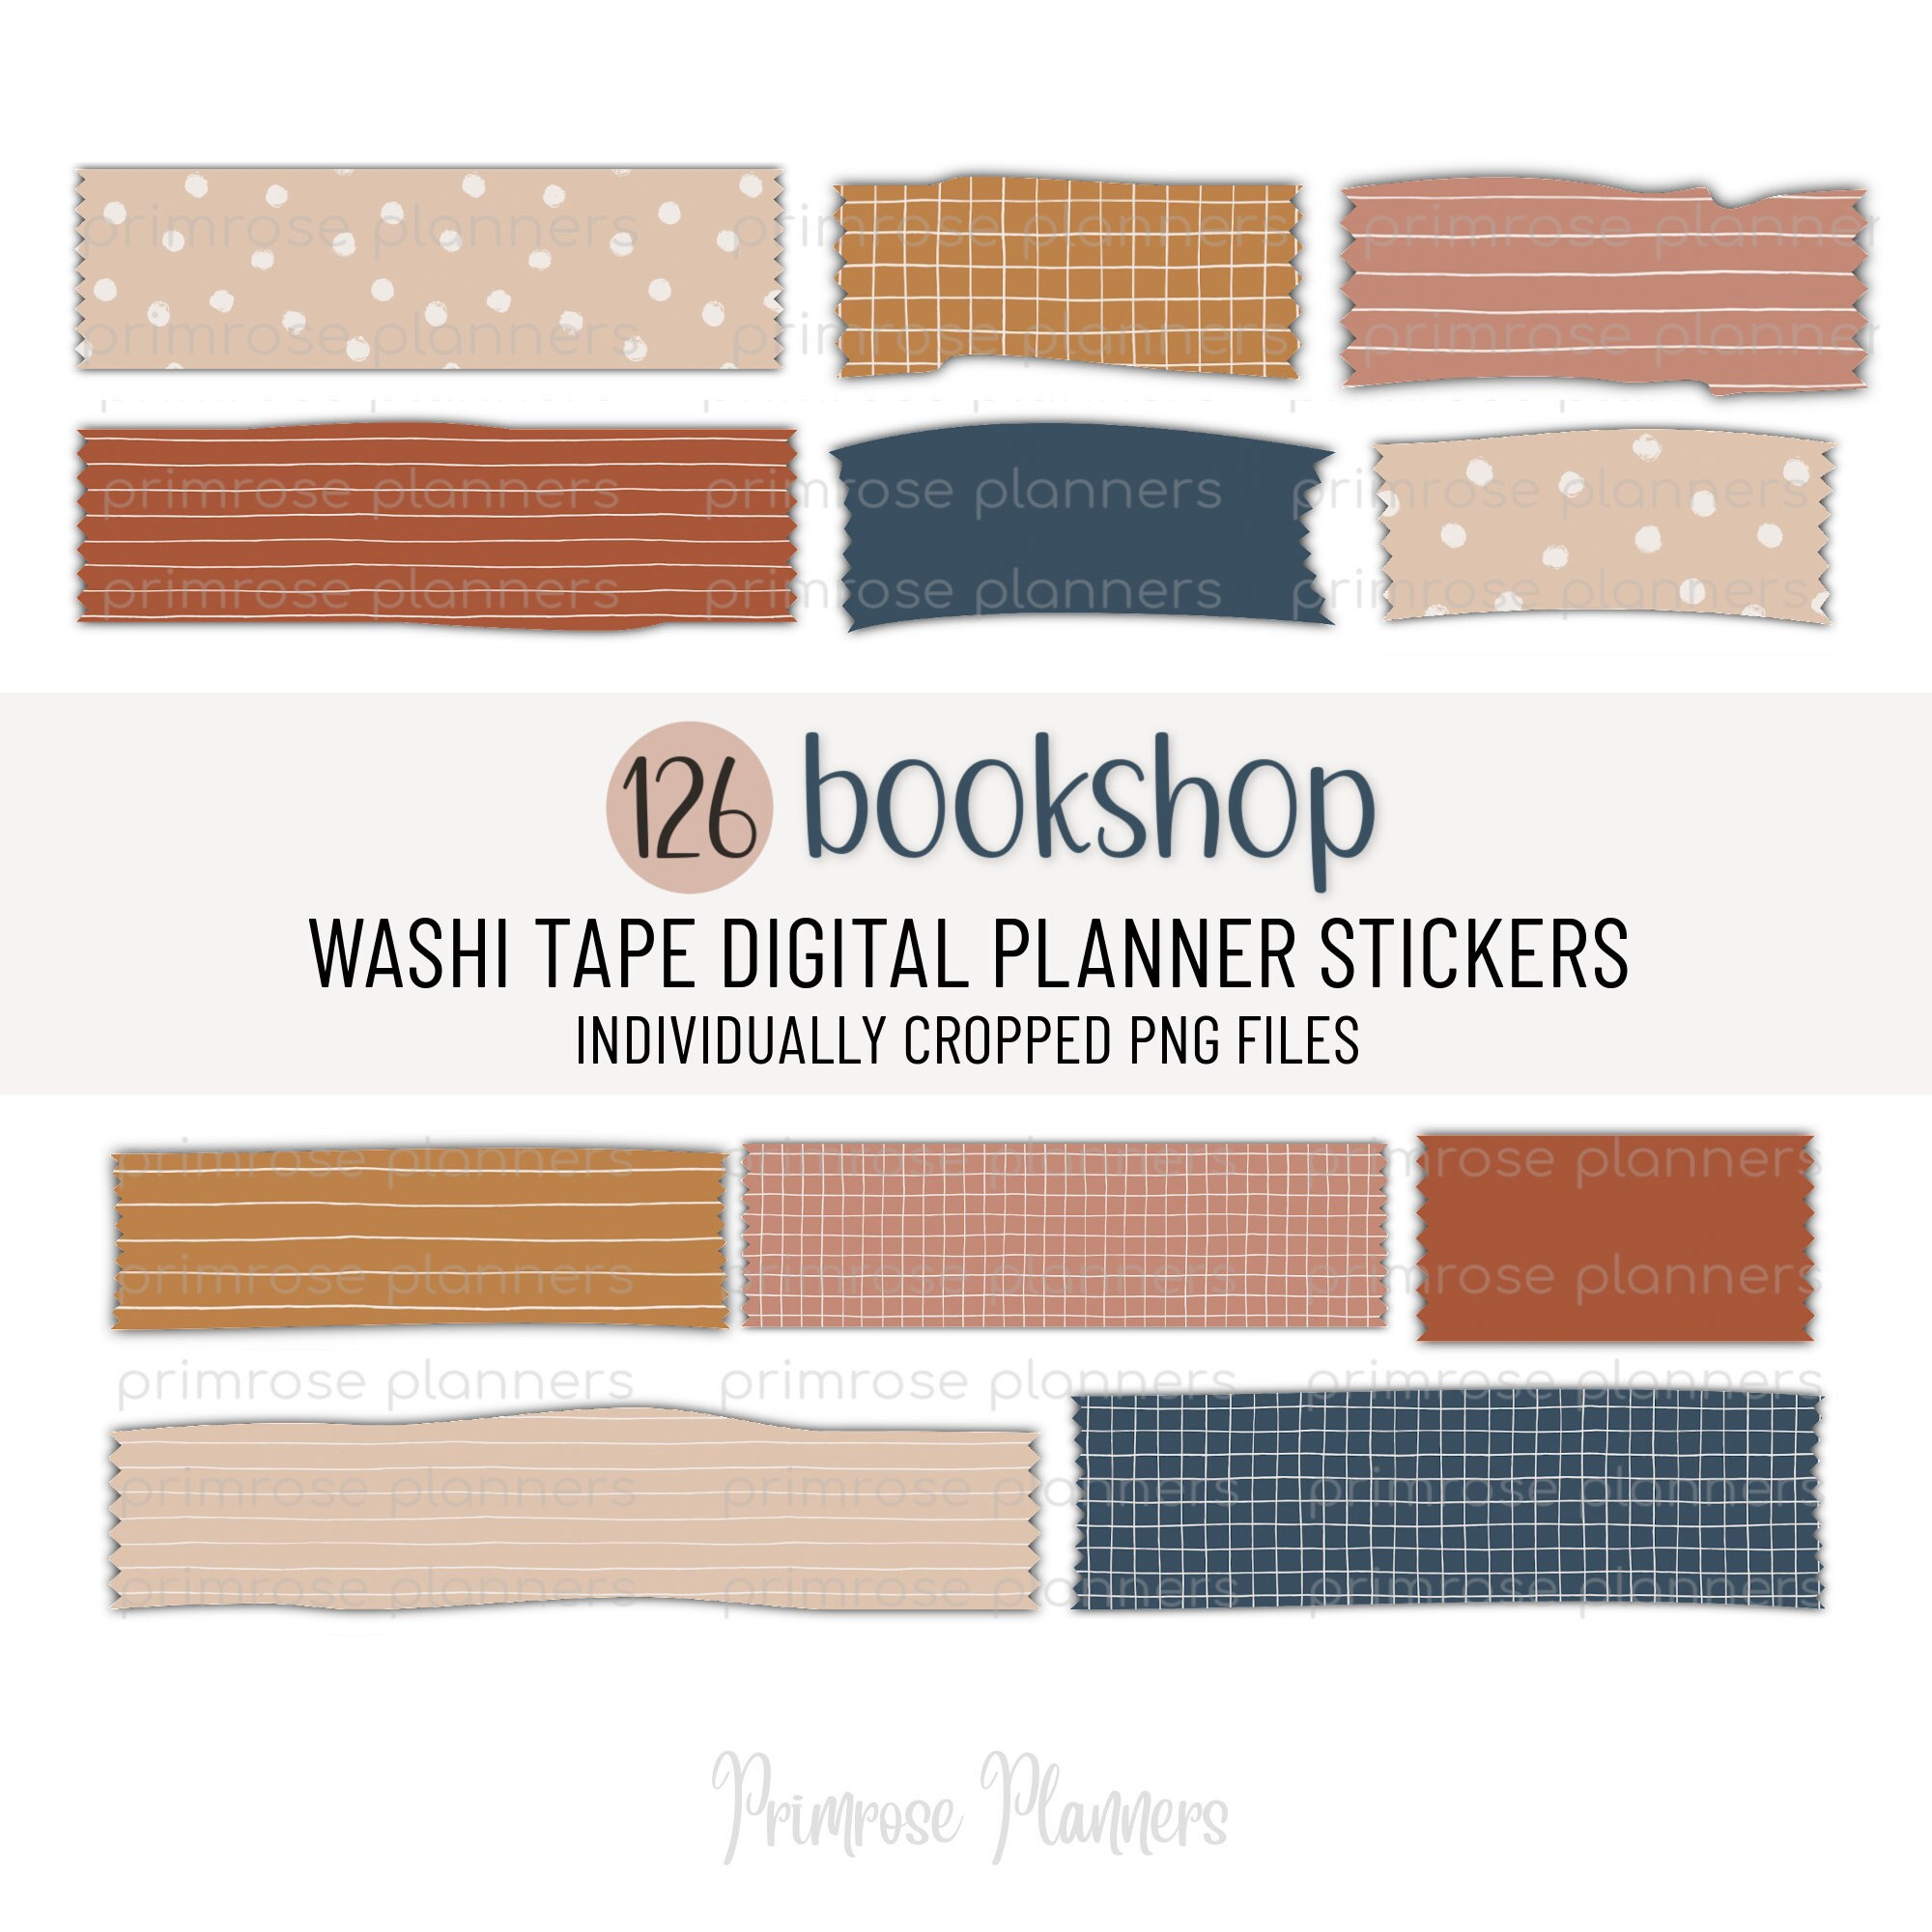 Digital Washi Tapes, Tape Cliparts (2195390)